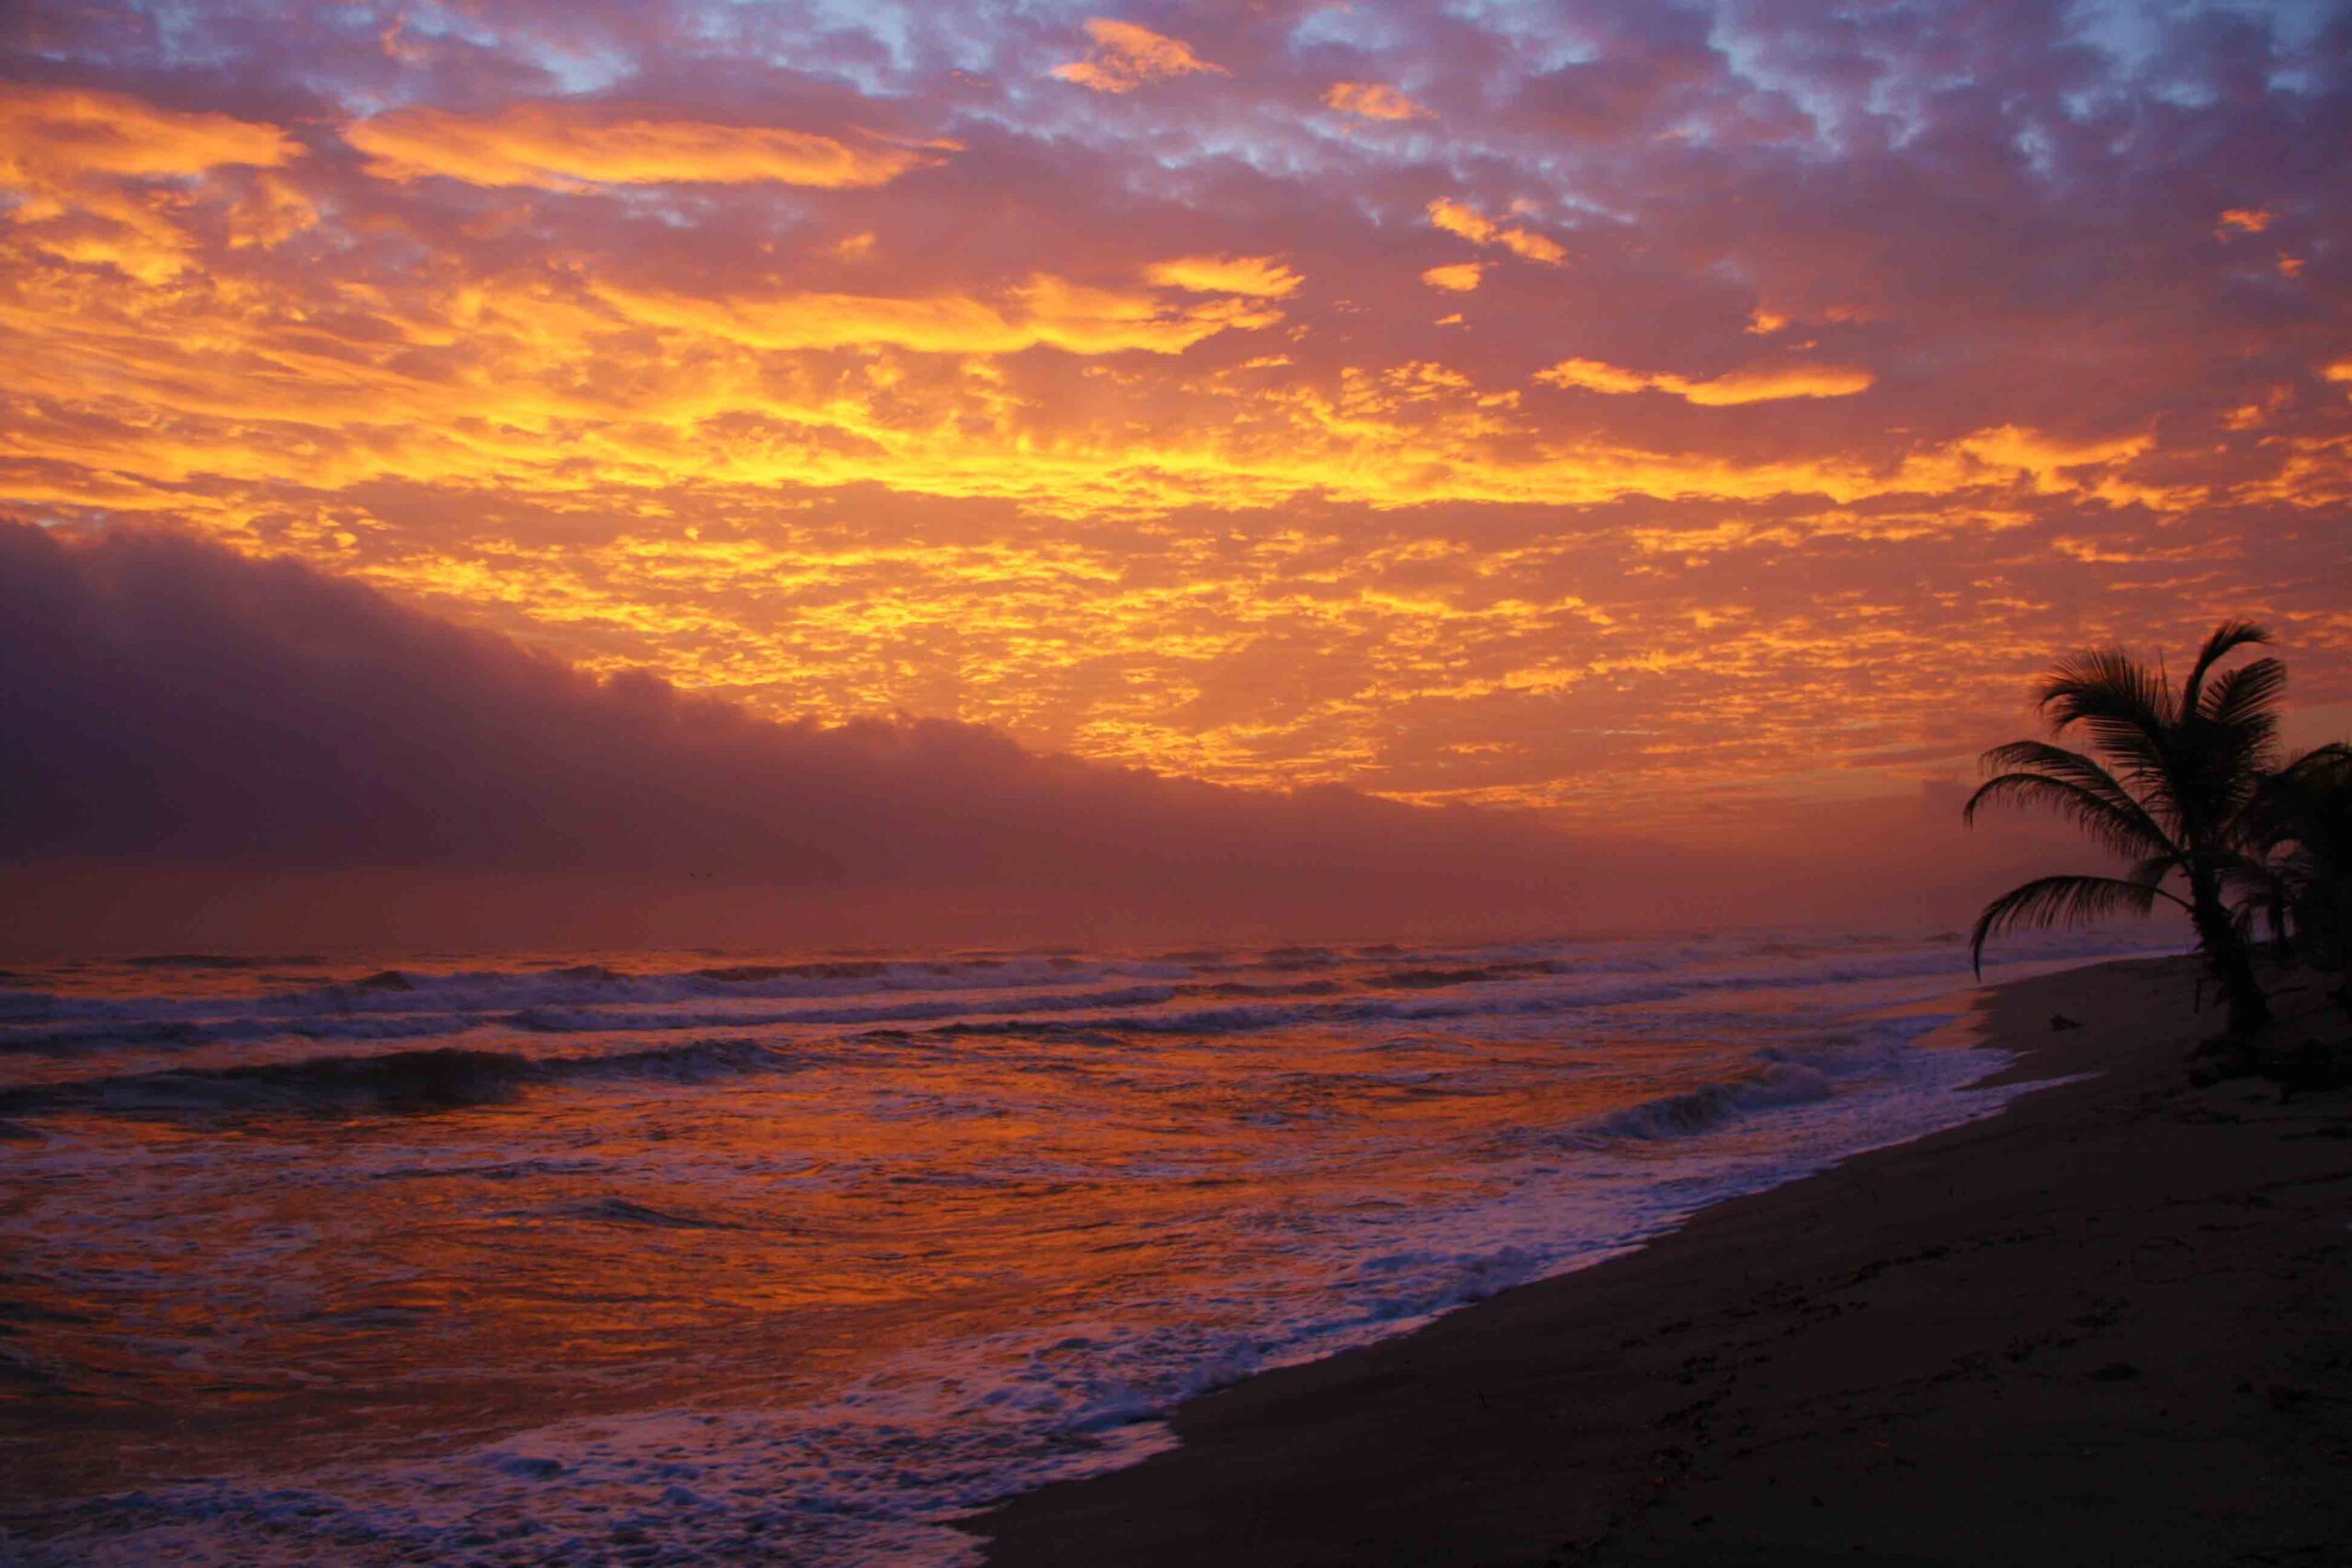 sunrise sky at costeno beach